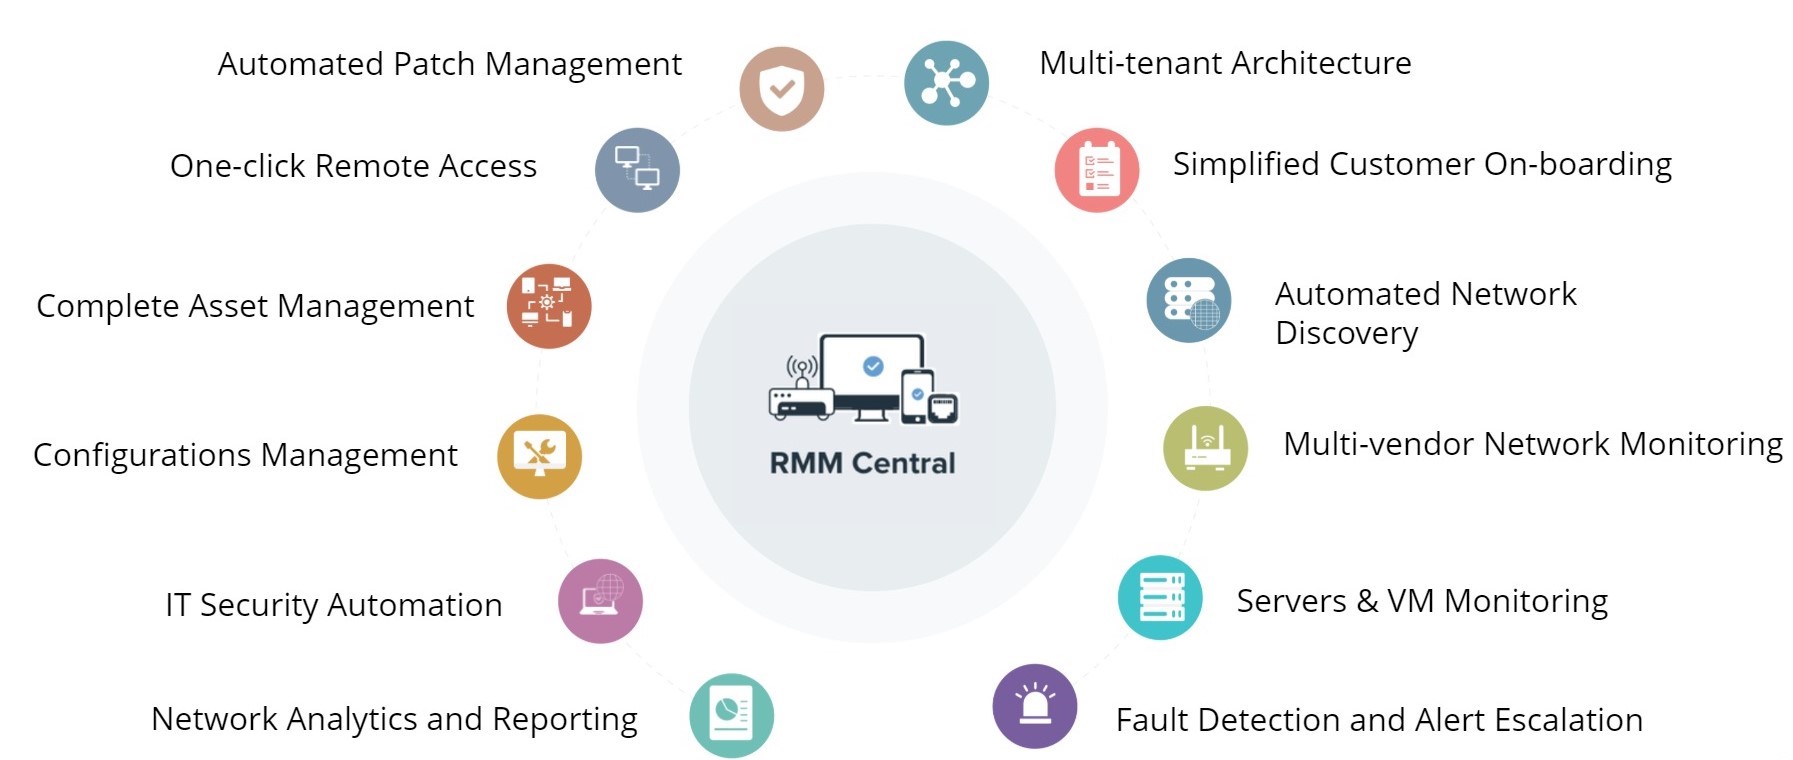 MSP (Managed Service Provider) Software - ManageEngine RMM Central